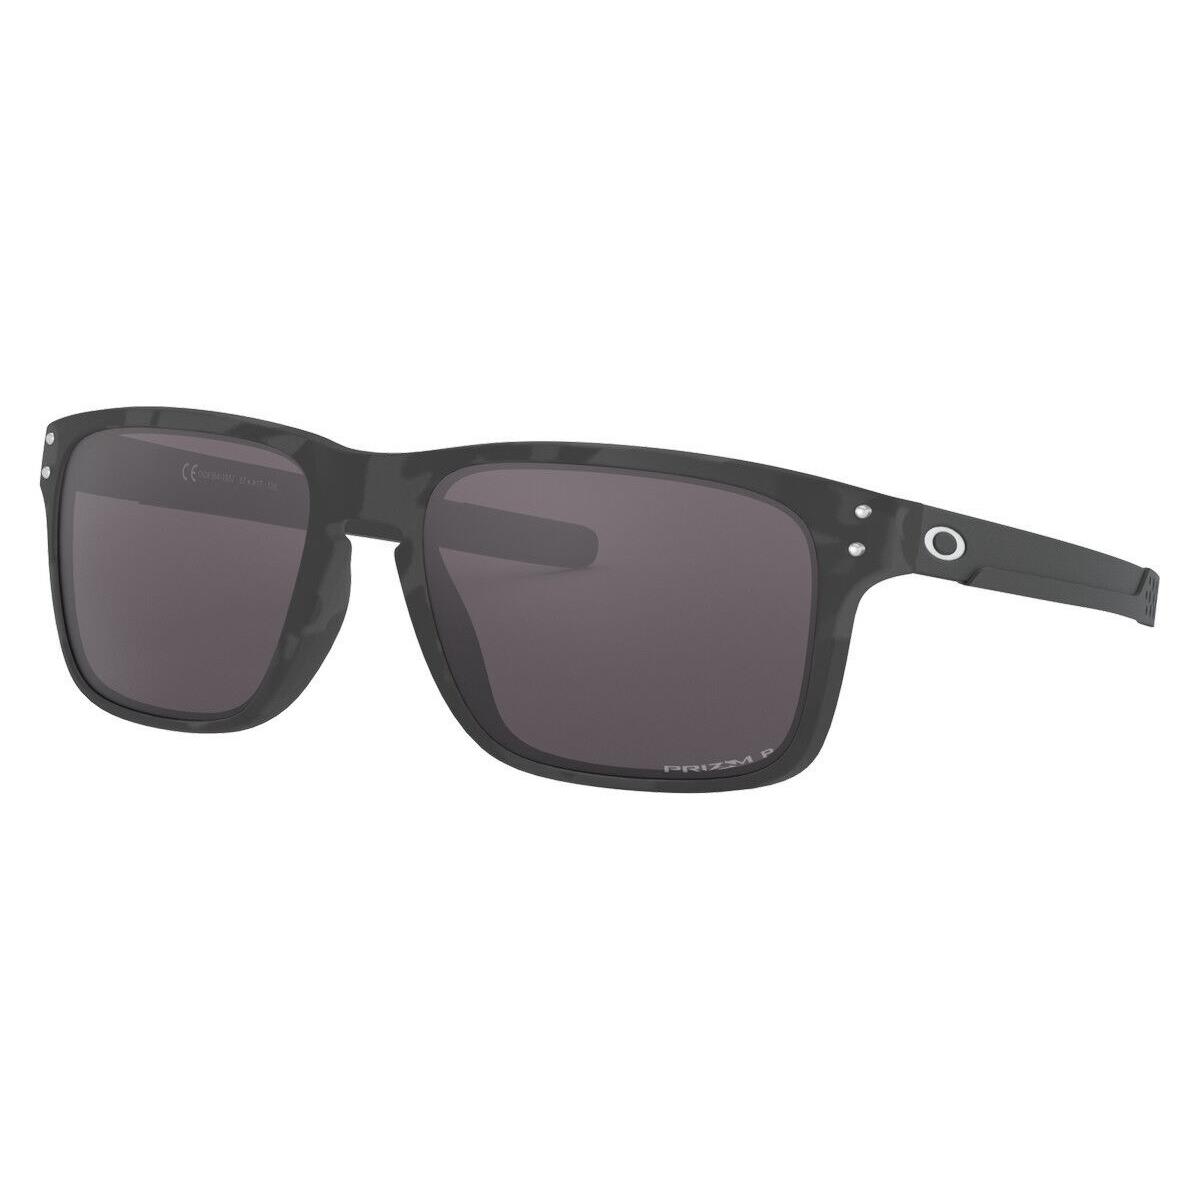 Oakley Sunglasses Holbrook Mix Matte Black Camo Prizm Grey Polarized OO9384-19 - Frame: Matte Black Camo, Lens: Black